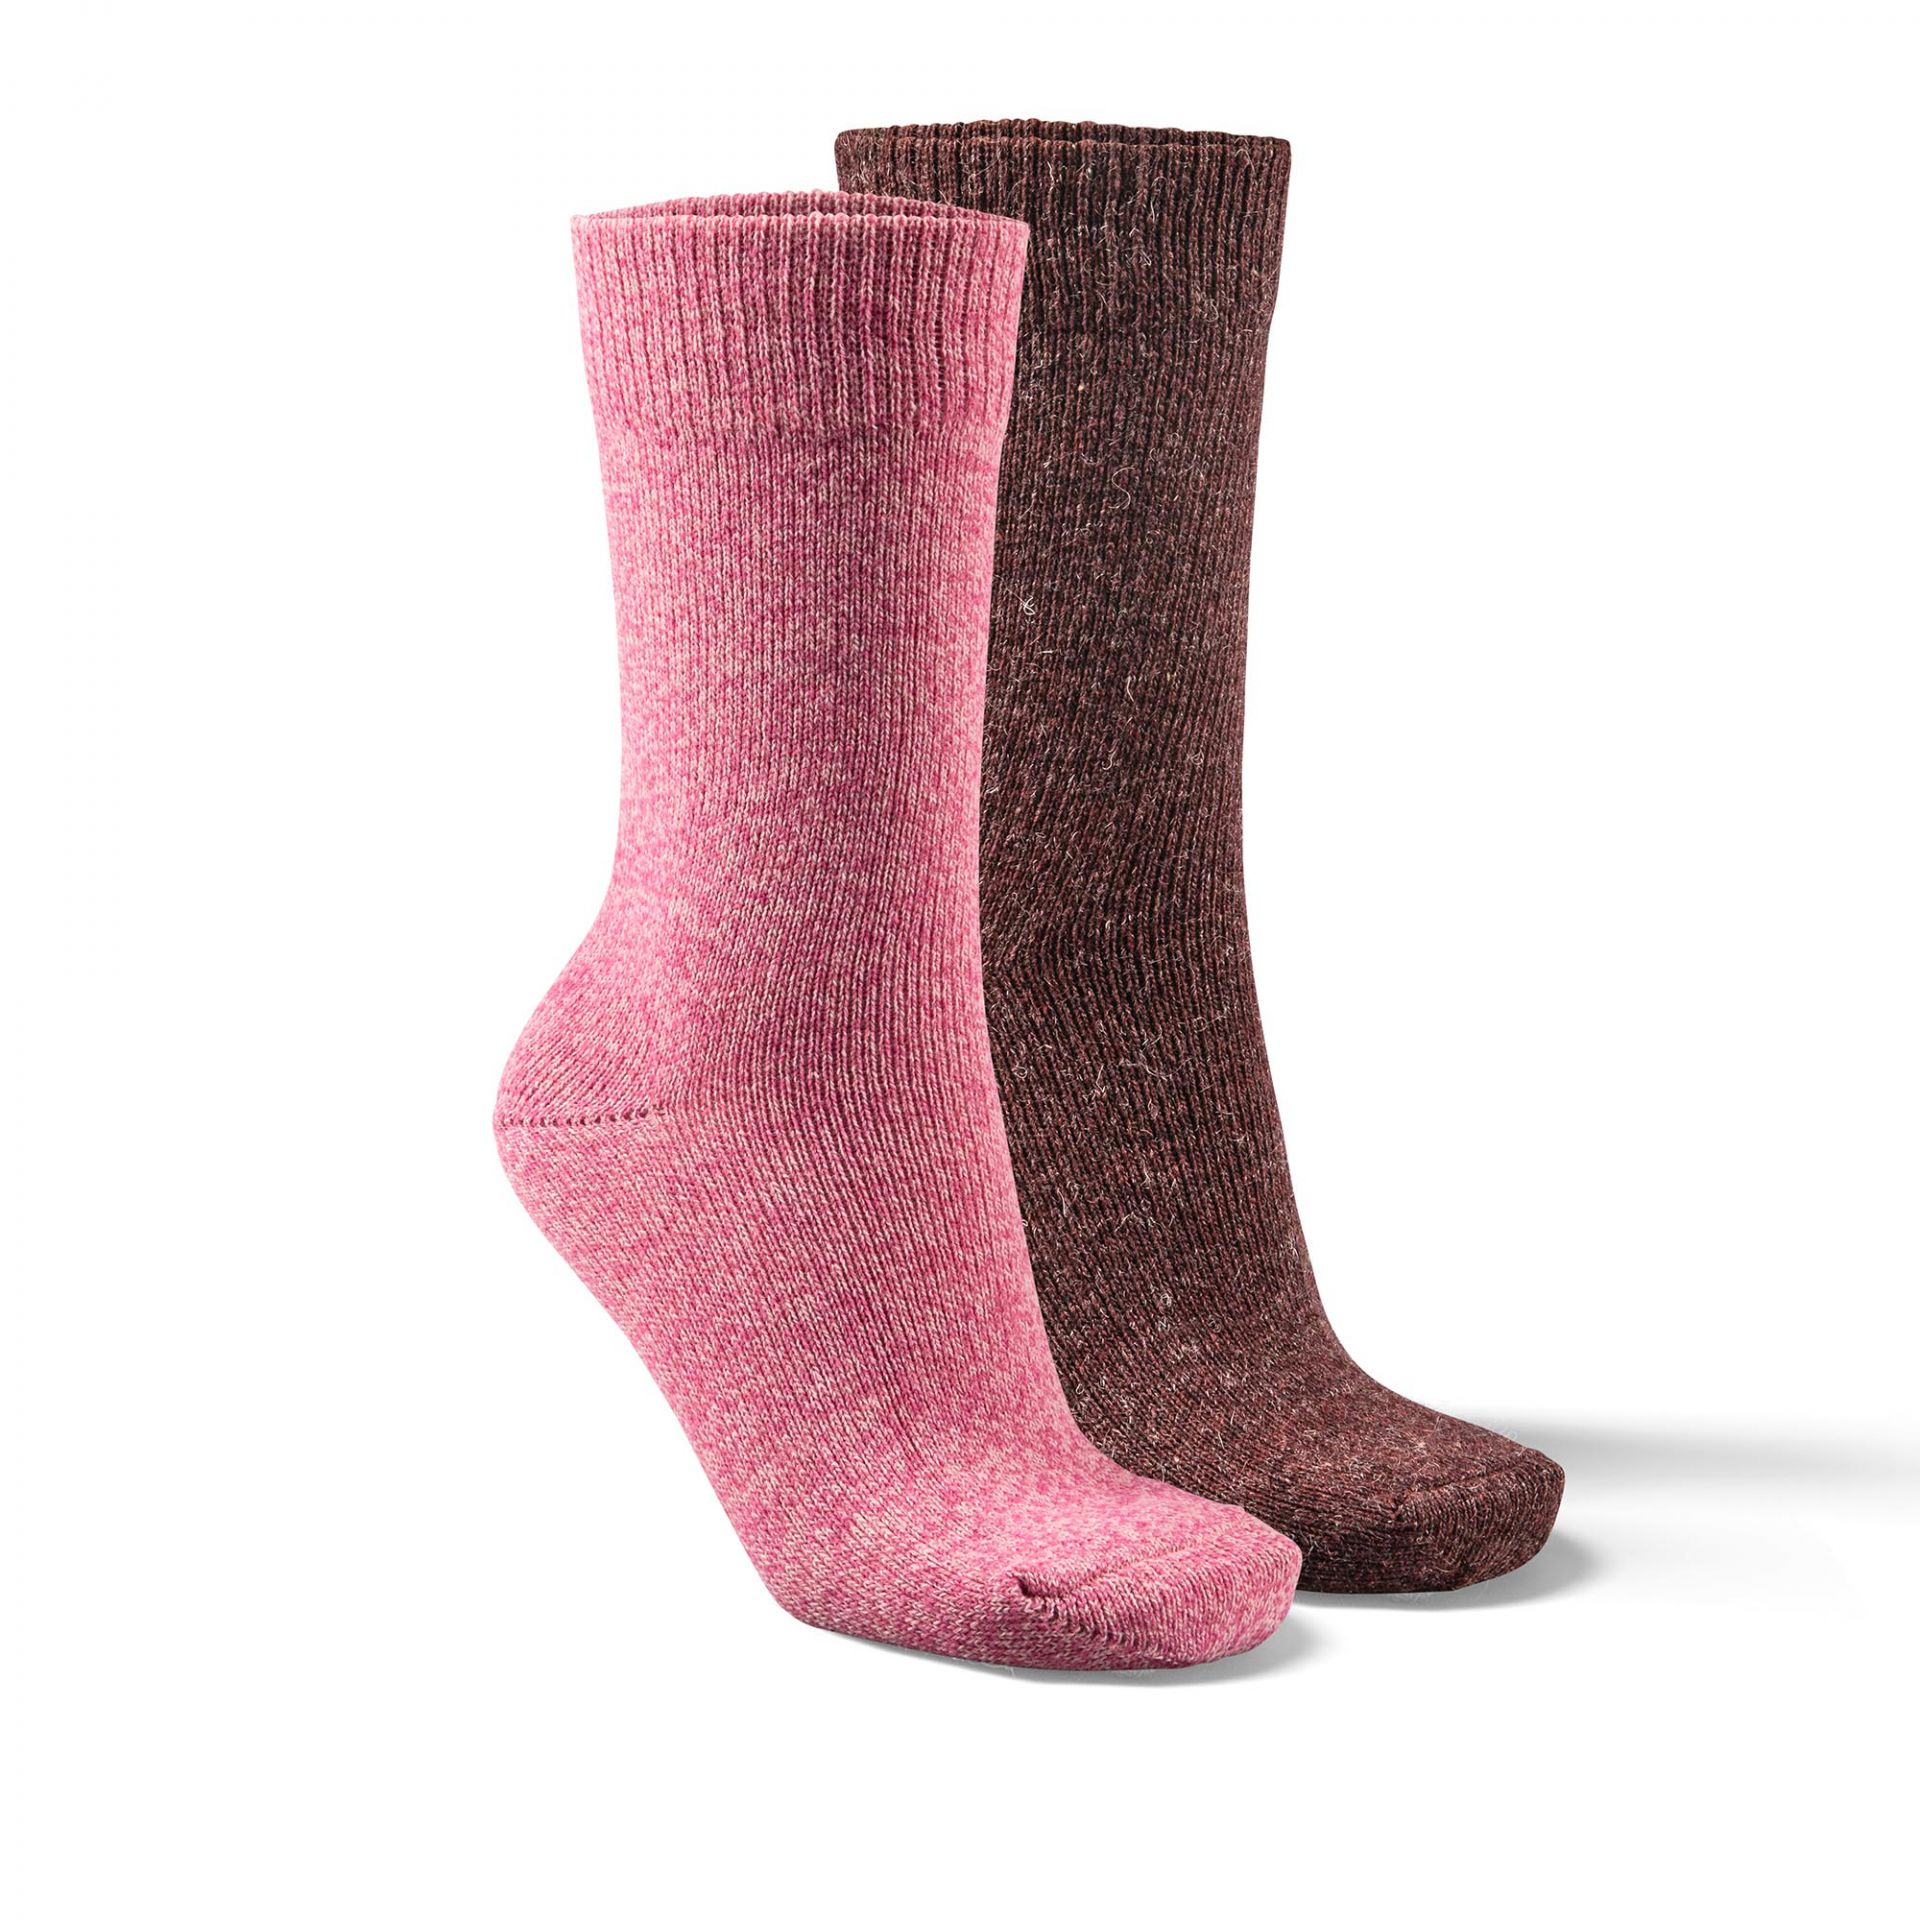 Alpaka barevné ponožky - duopack Velikost: 35 - 38, Zvolte variantu: červená/růžová